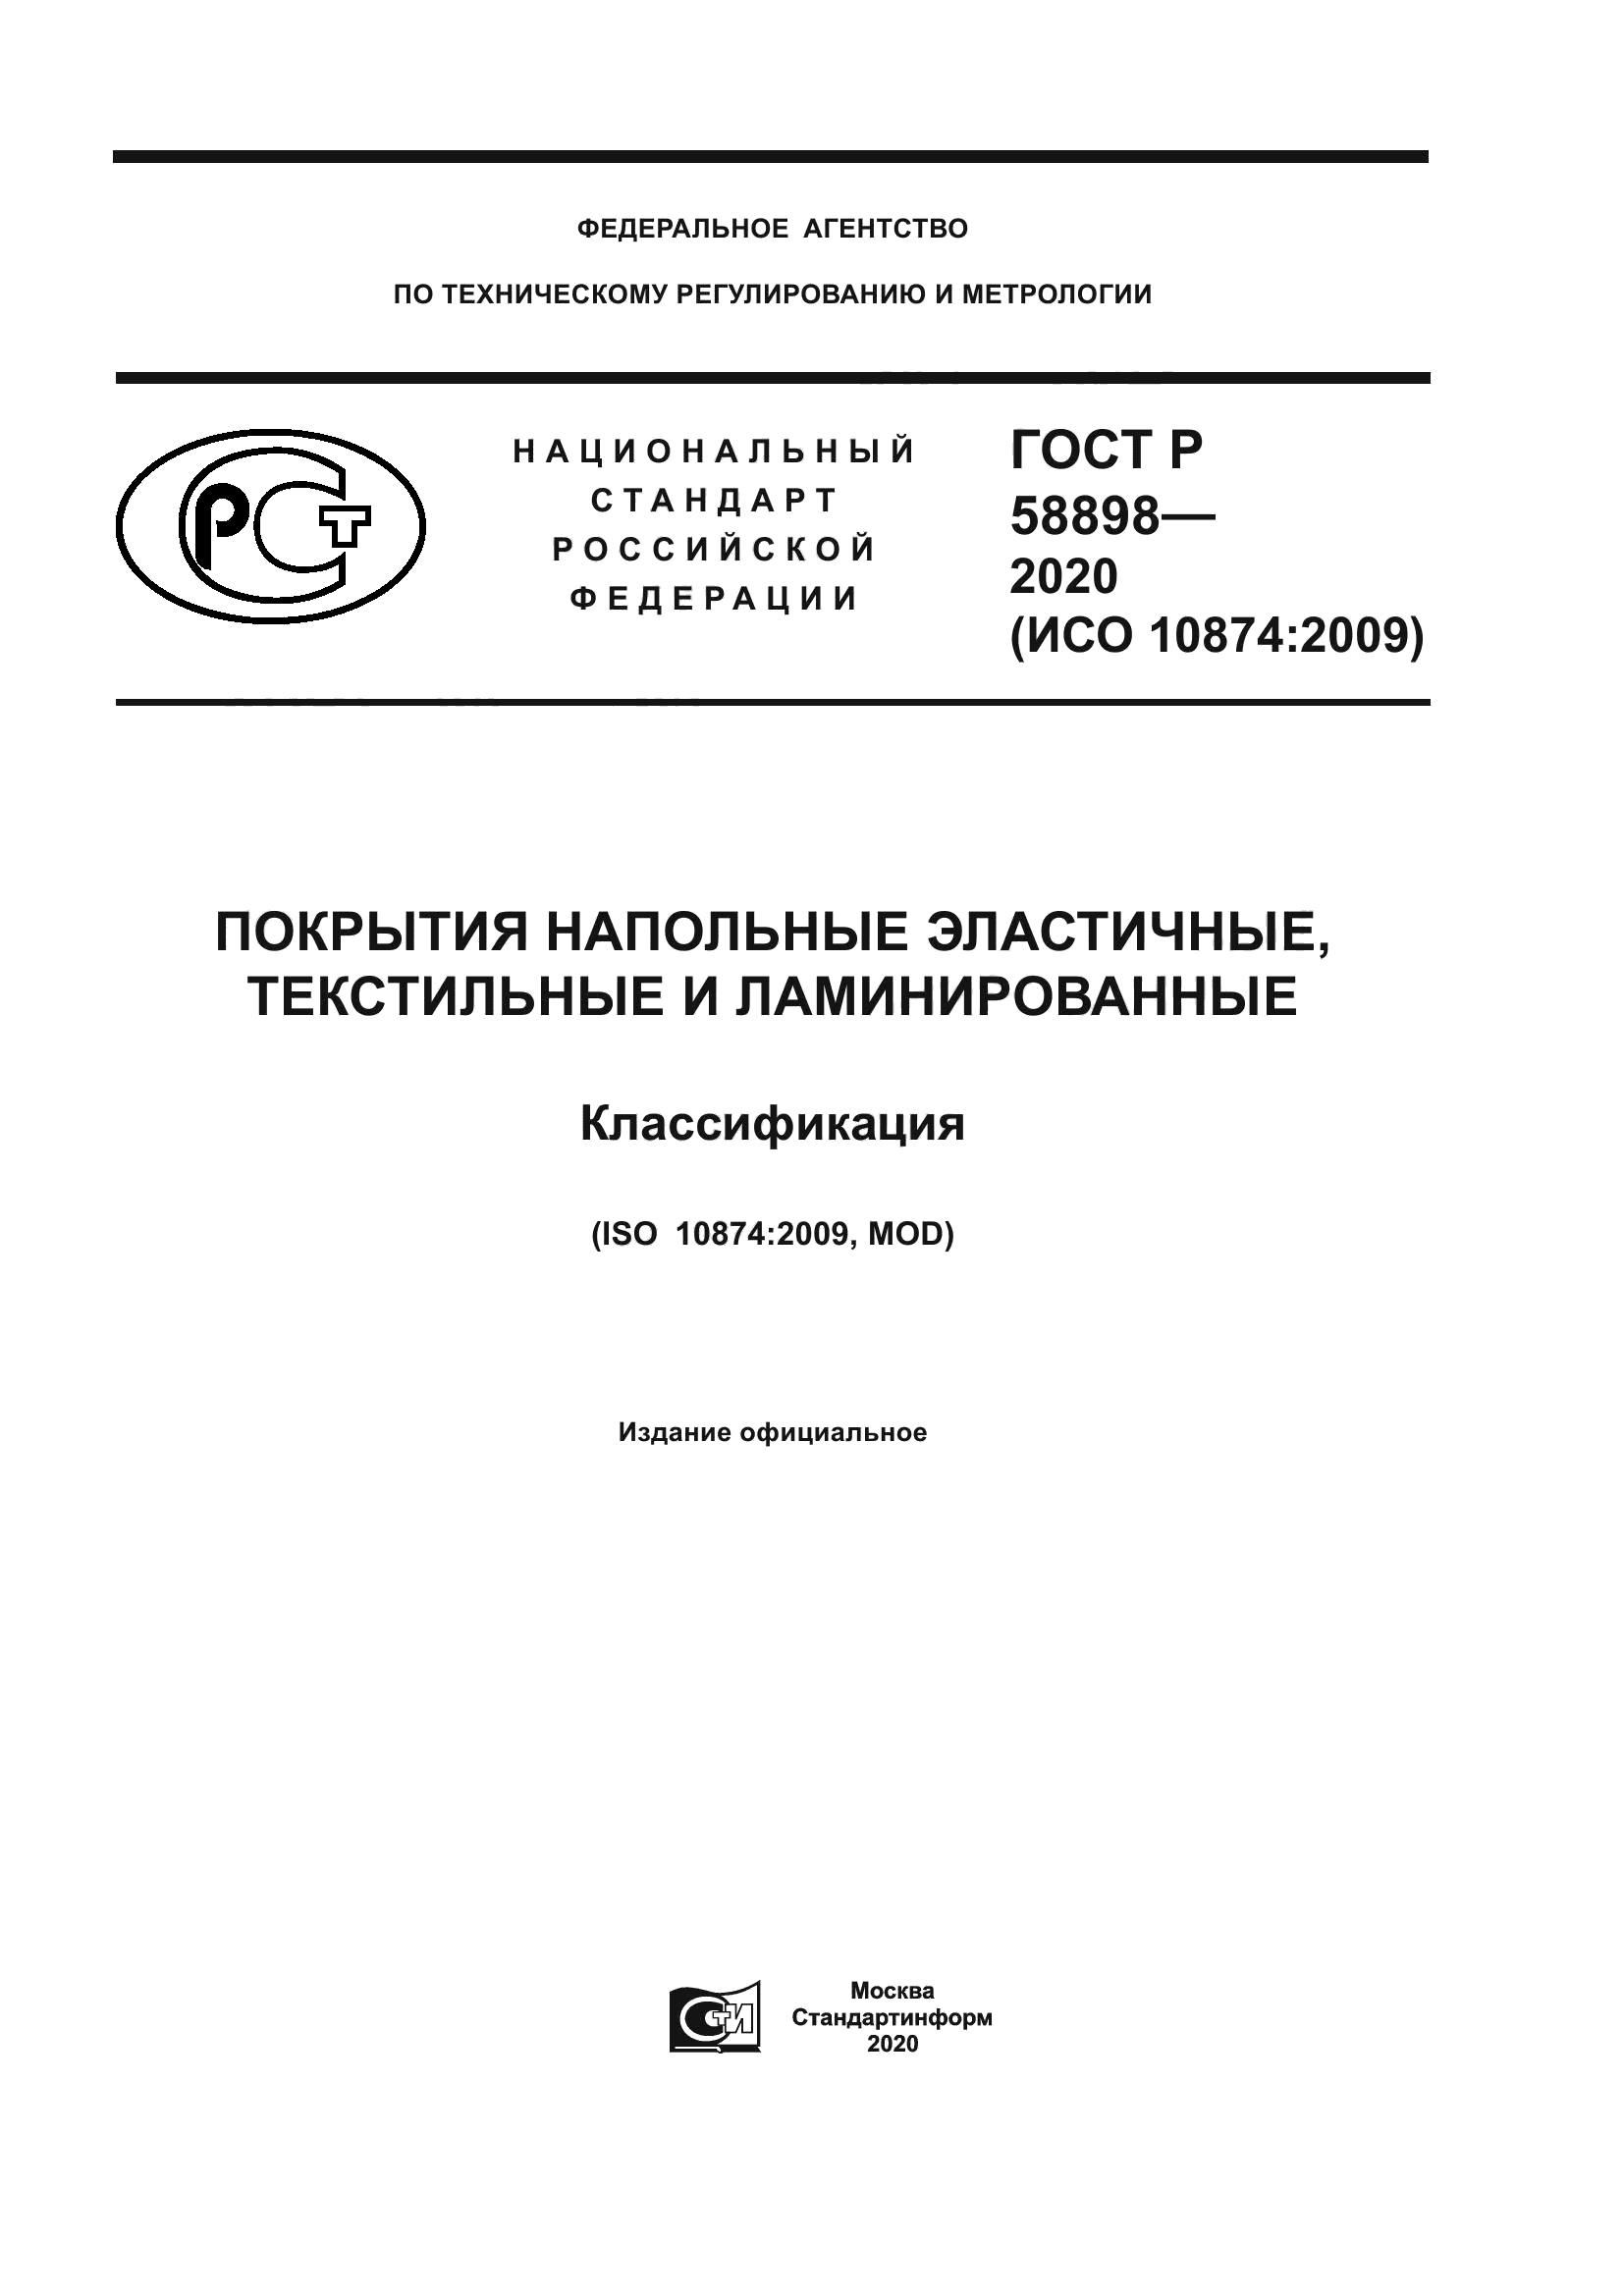 ГОСТ Р 58898-2020